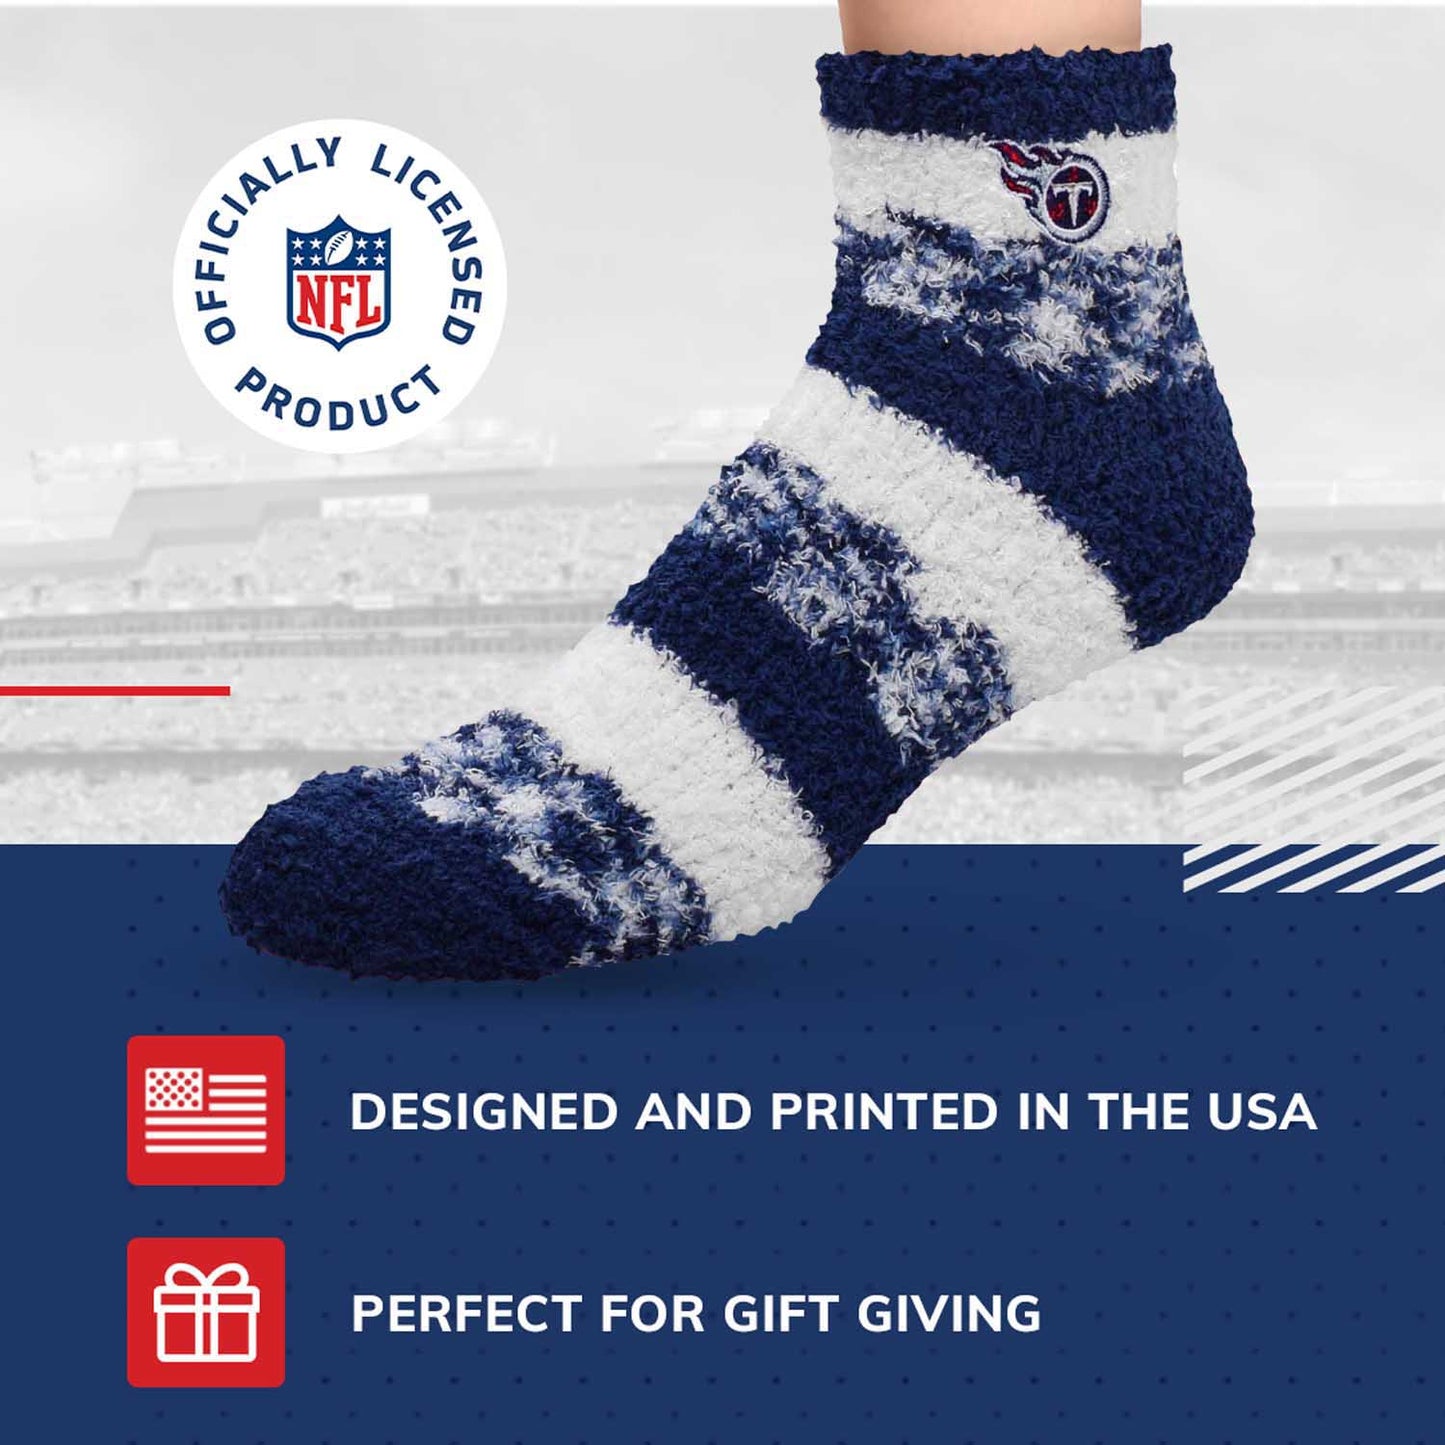 Tennessee Titans NFL Cozy Soft Slipper Socks - Navy